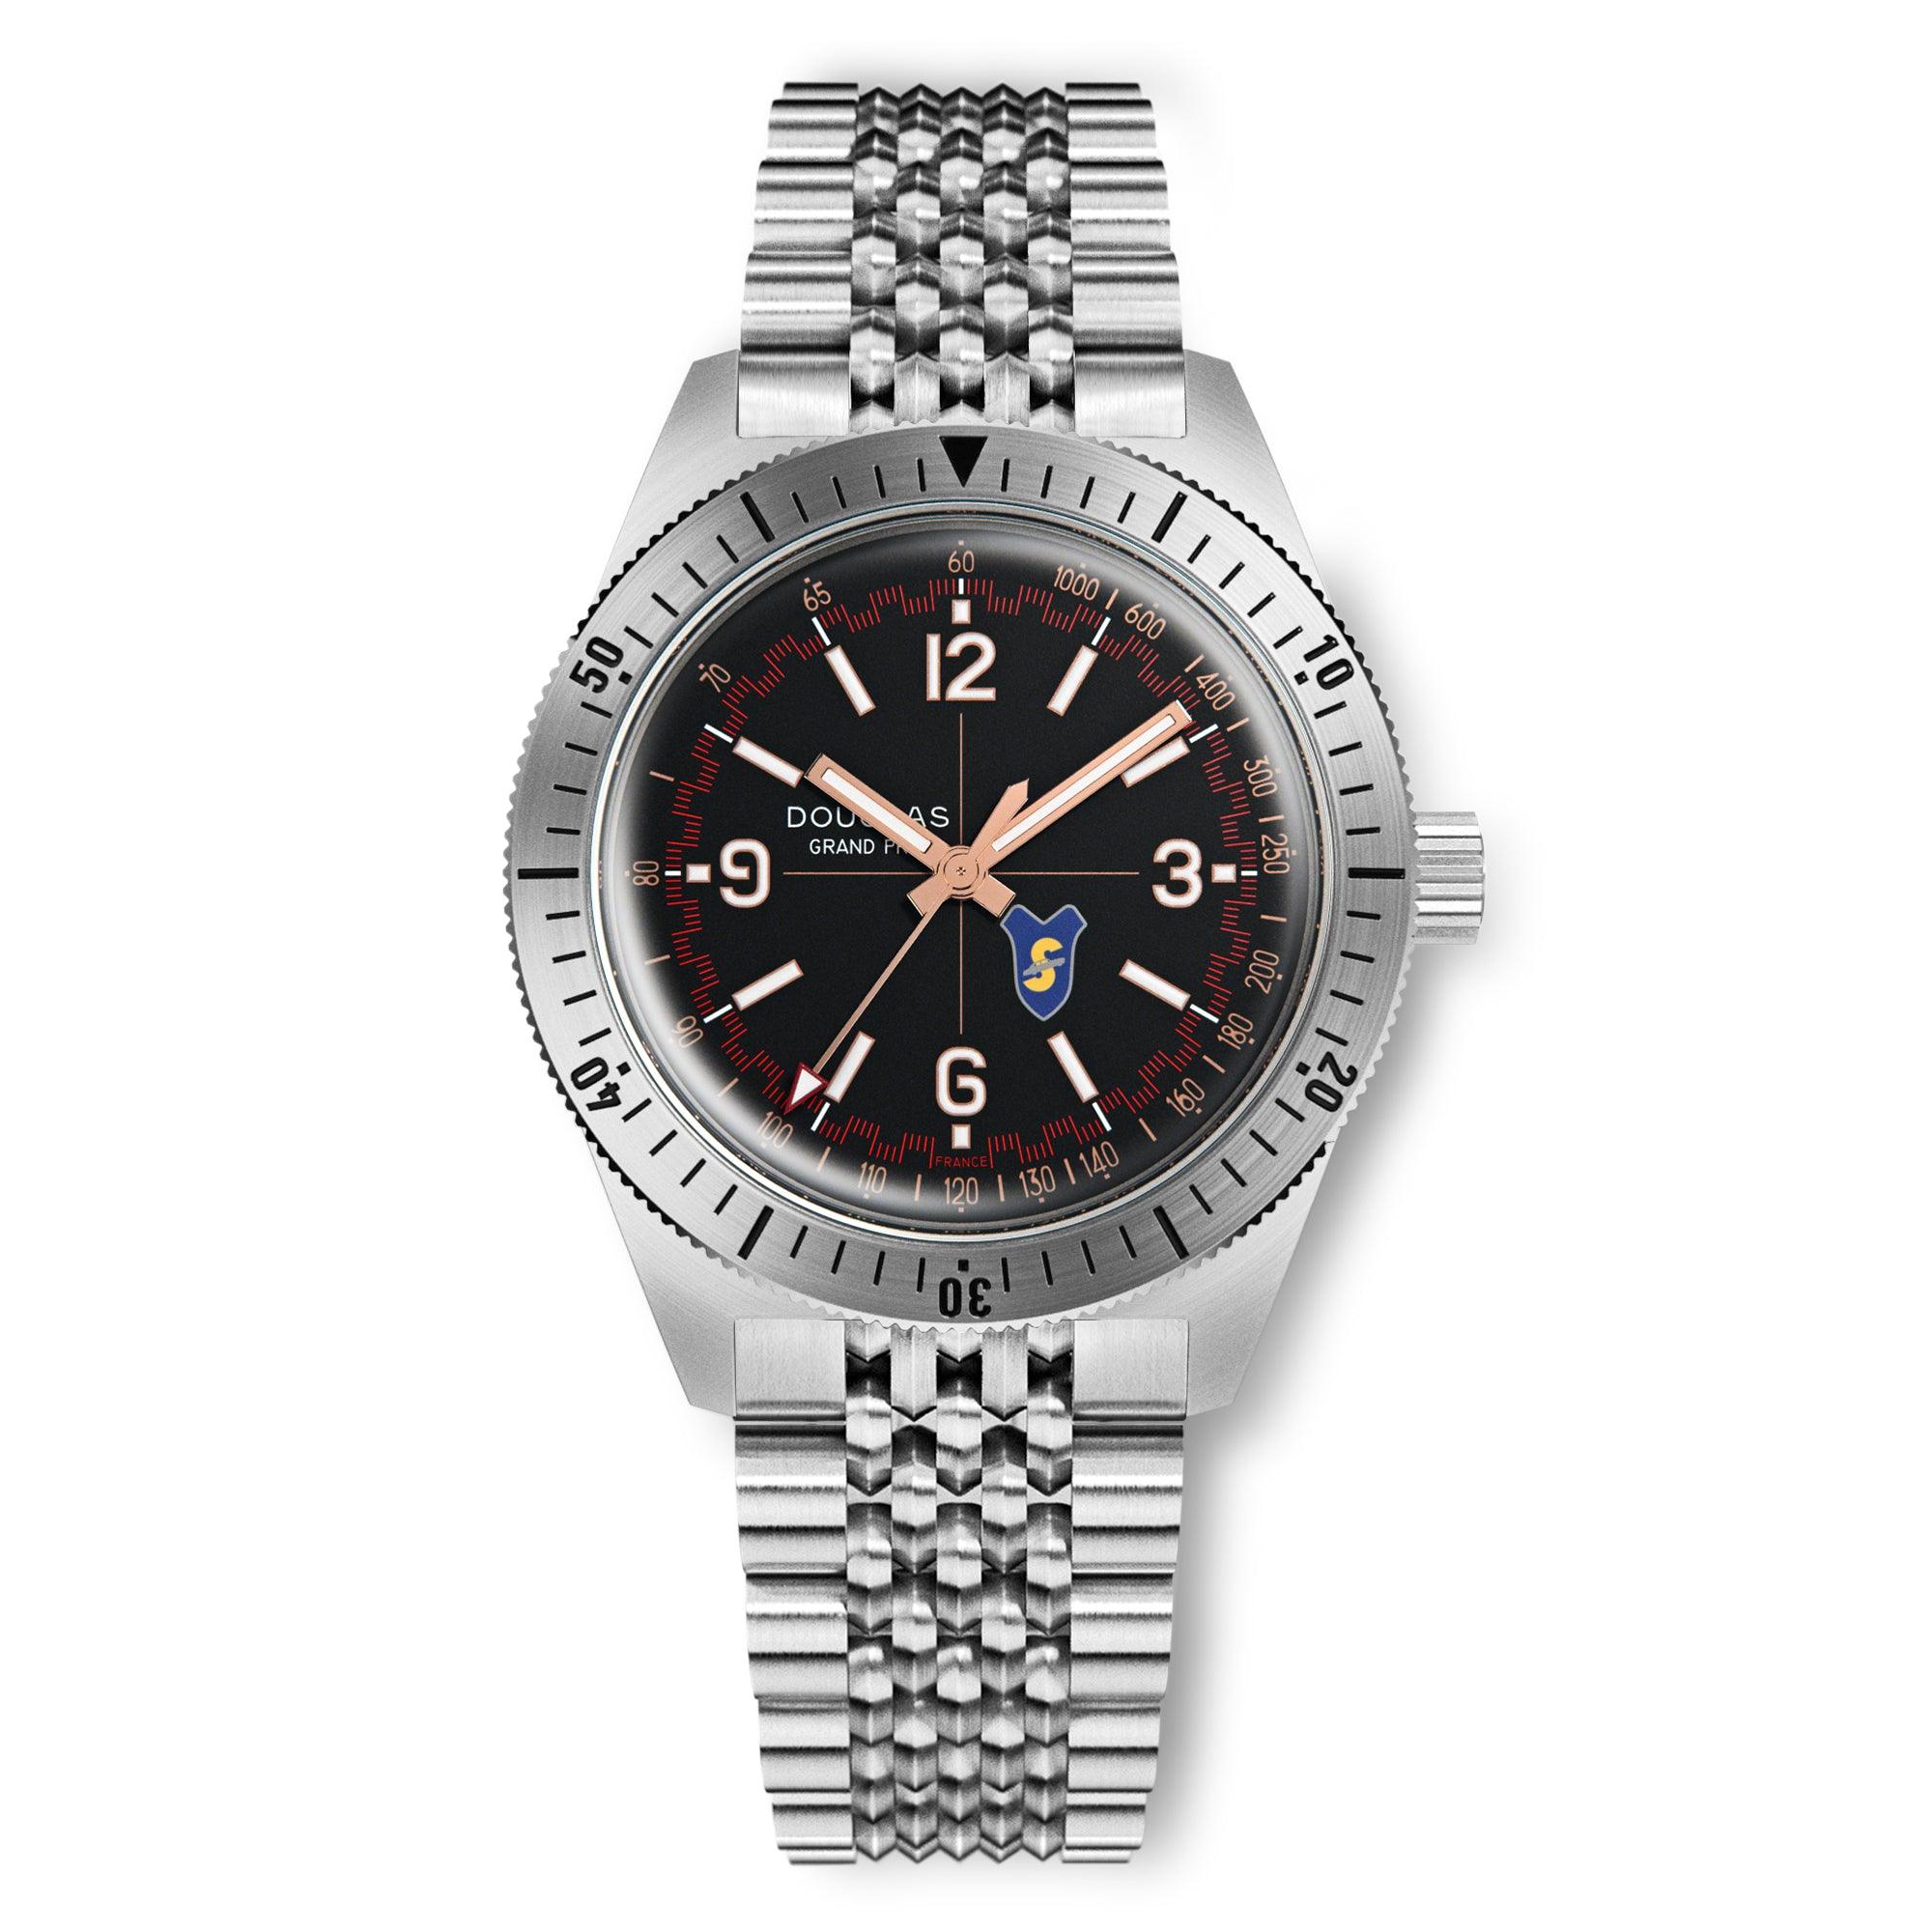 Grand Prix Professional Bracelet Racing Watch – Siata 208S 1953 Limited Edition